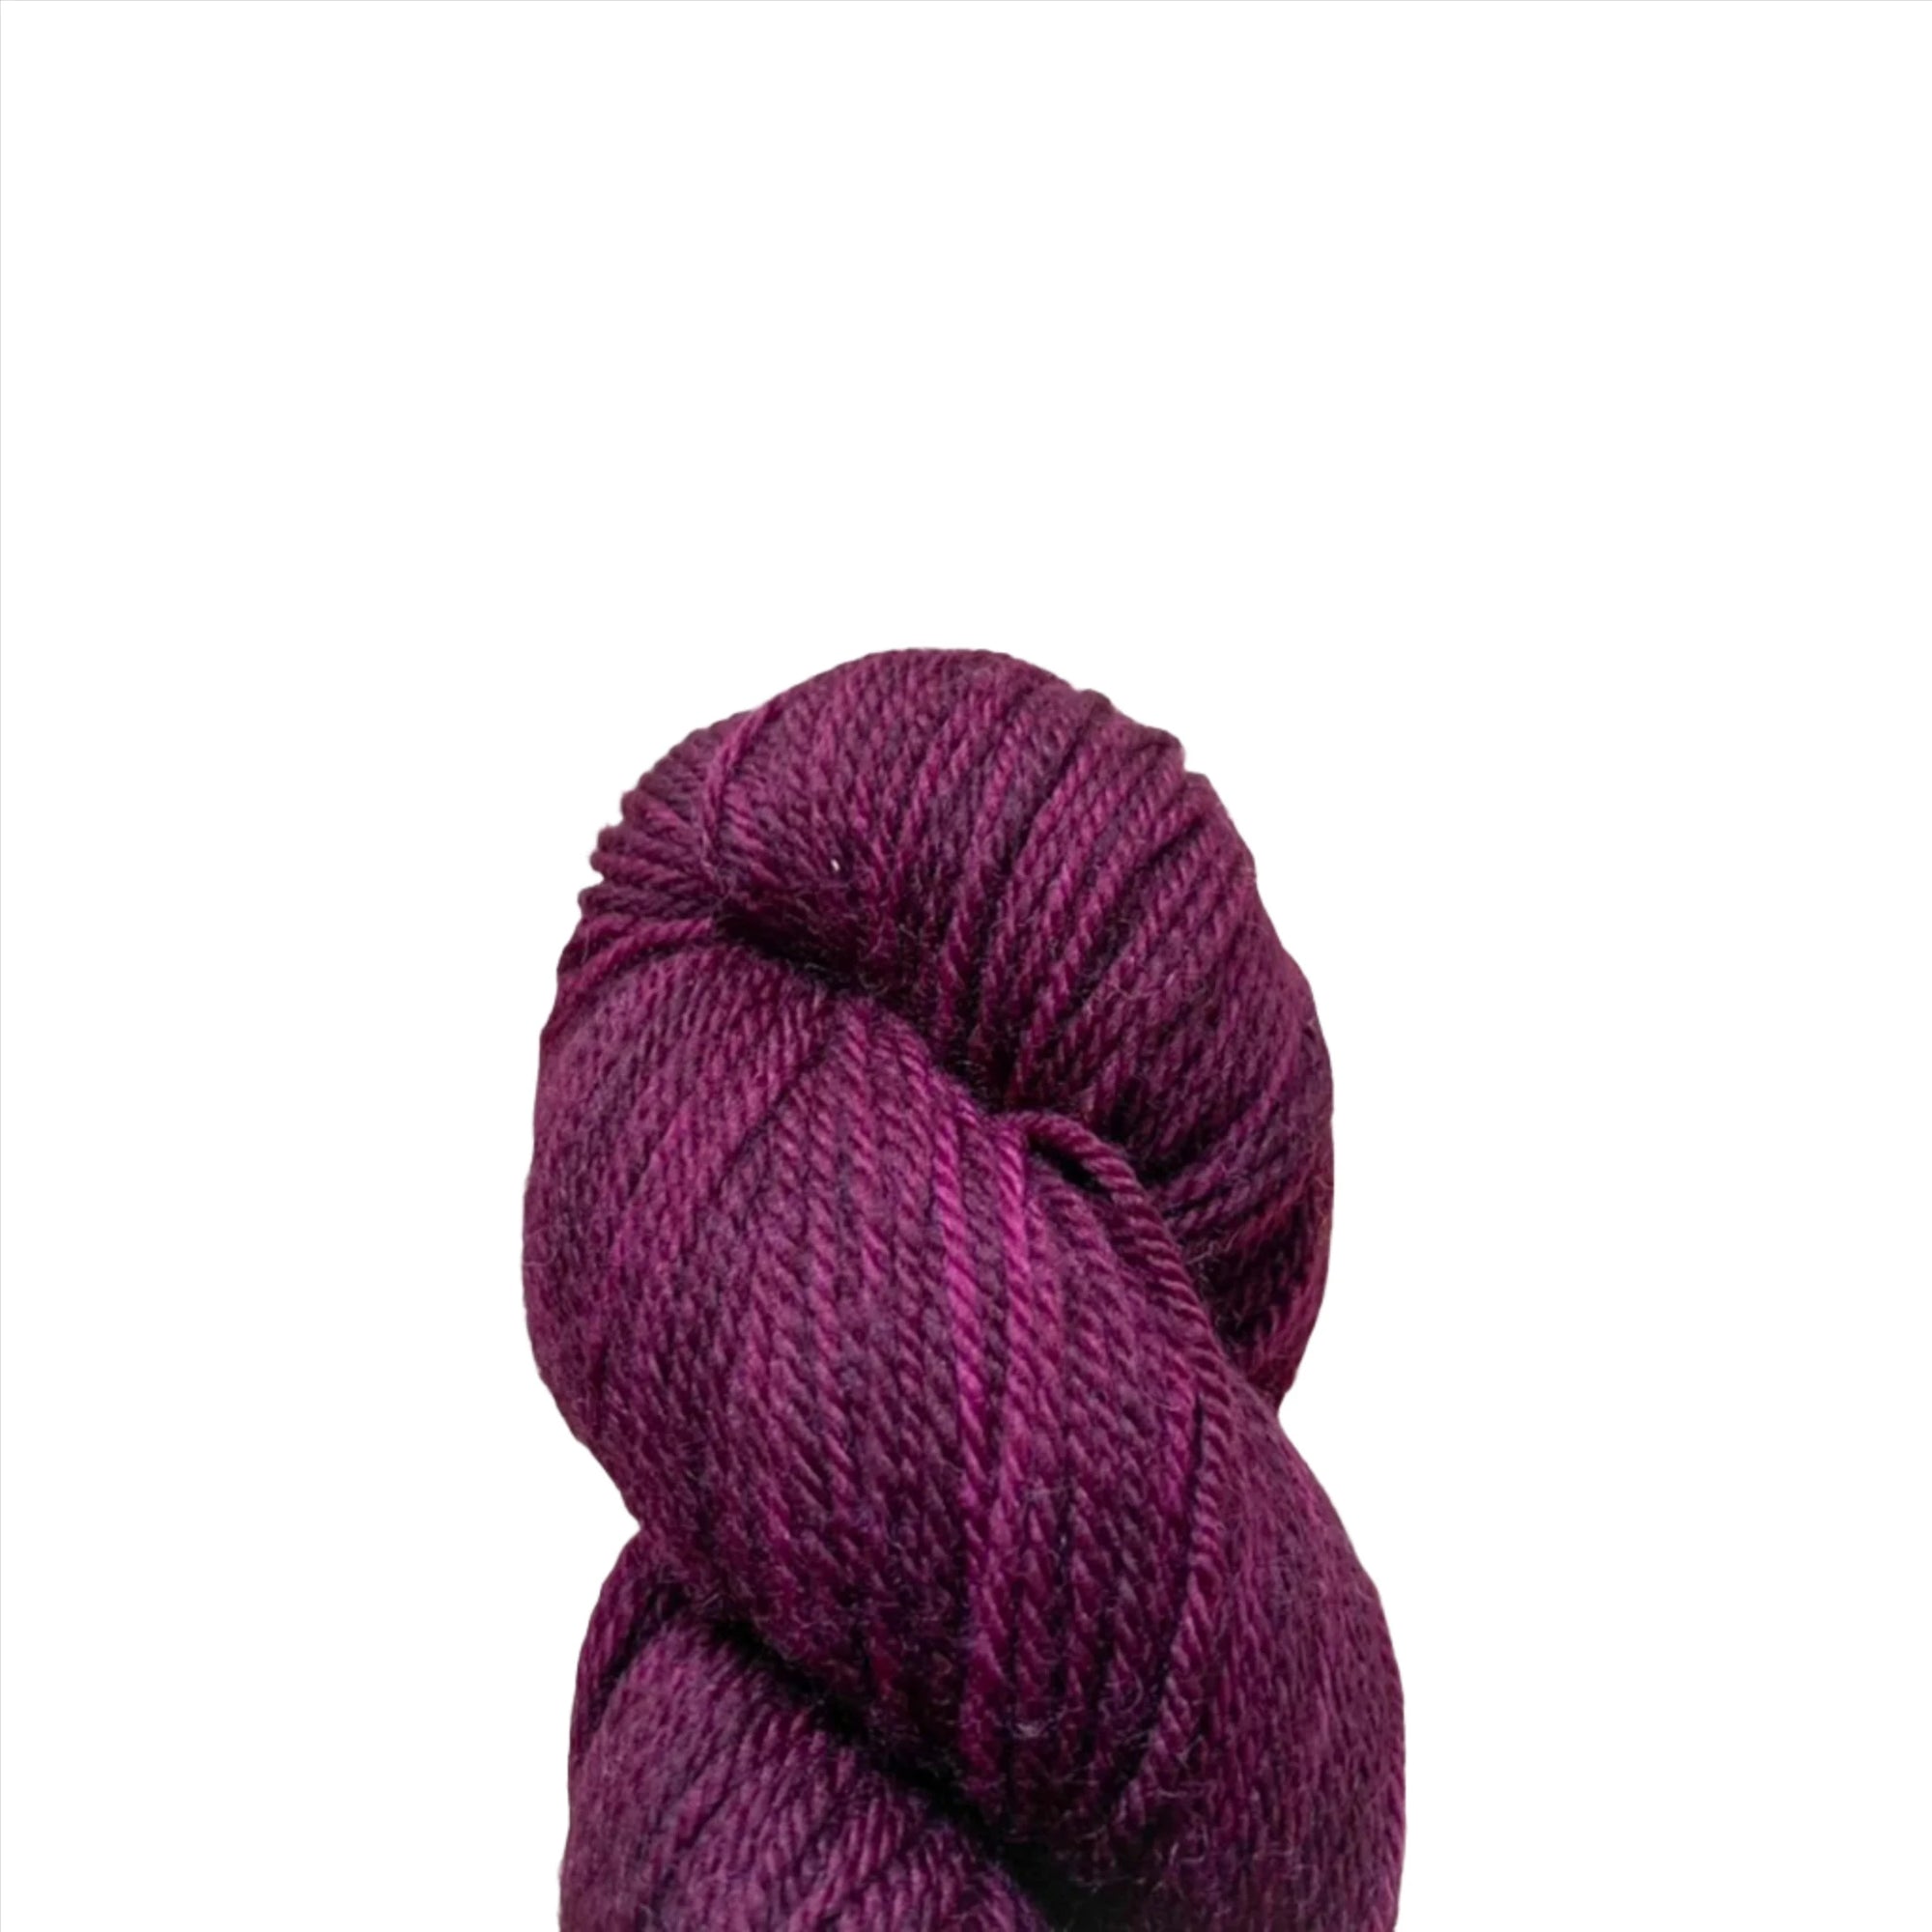 Koigu Jasmine - Koigu - J2239-0014 - The Little Yarn Store